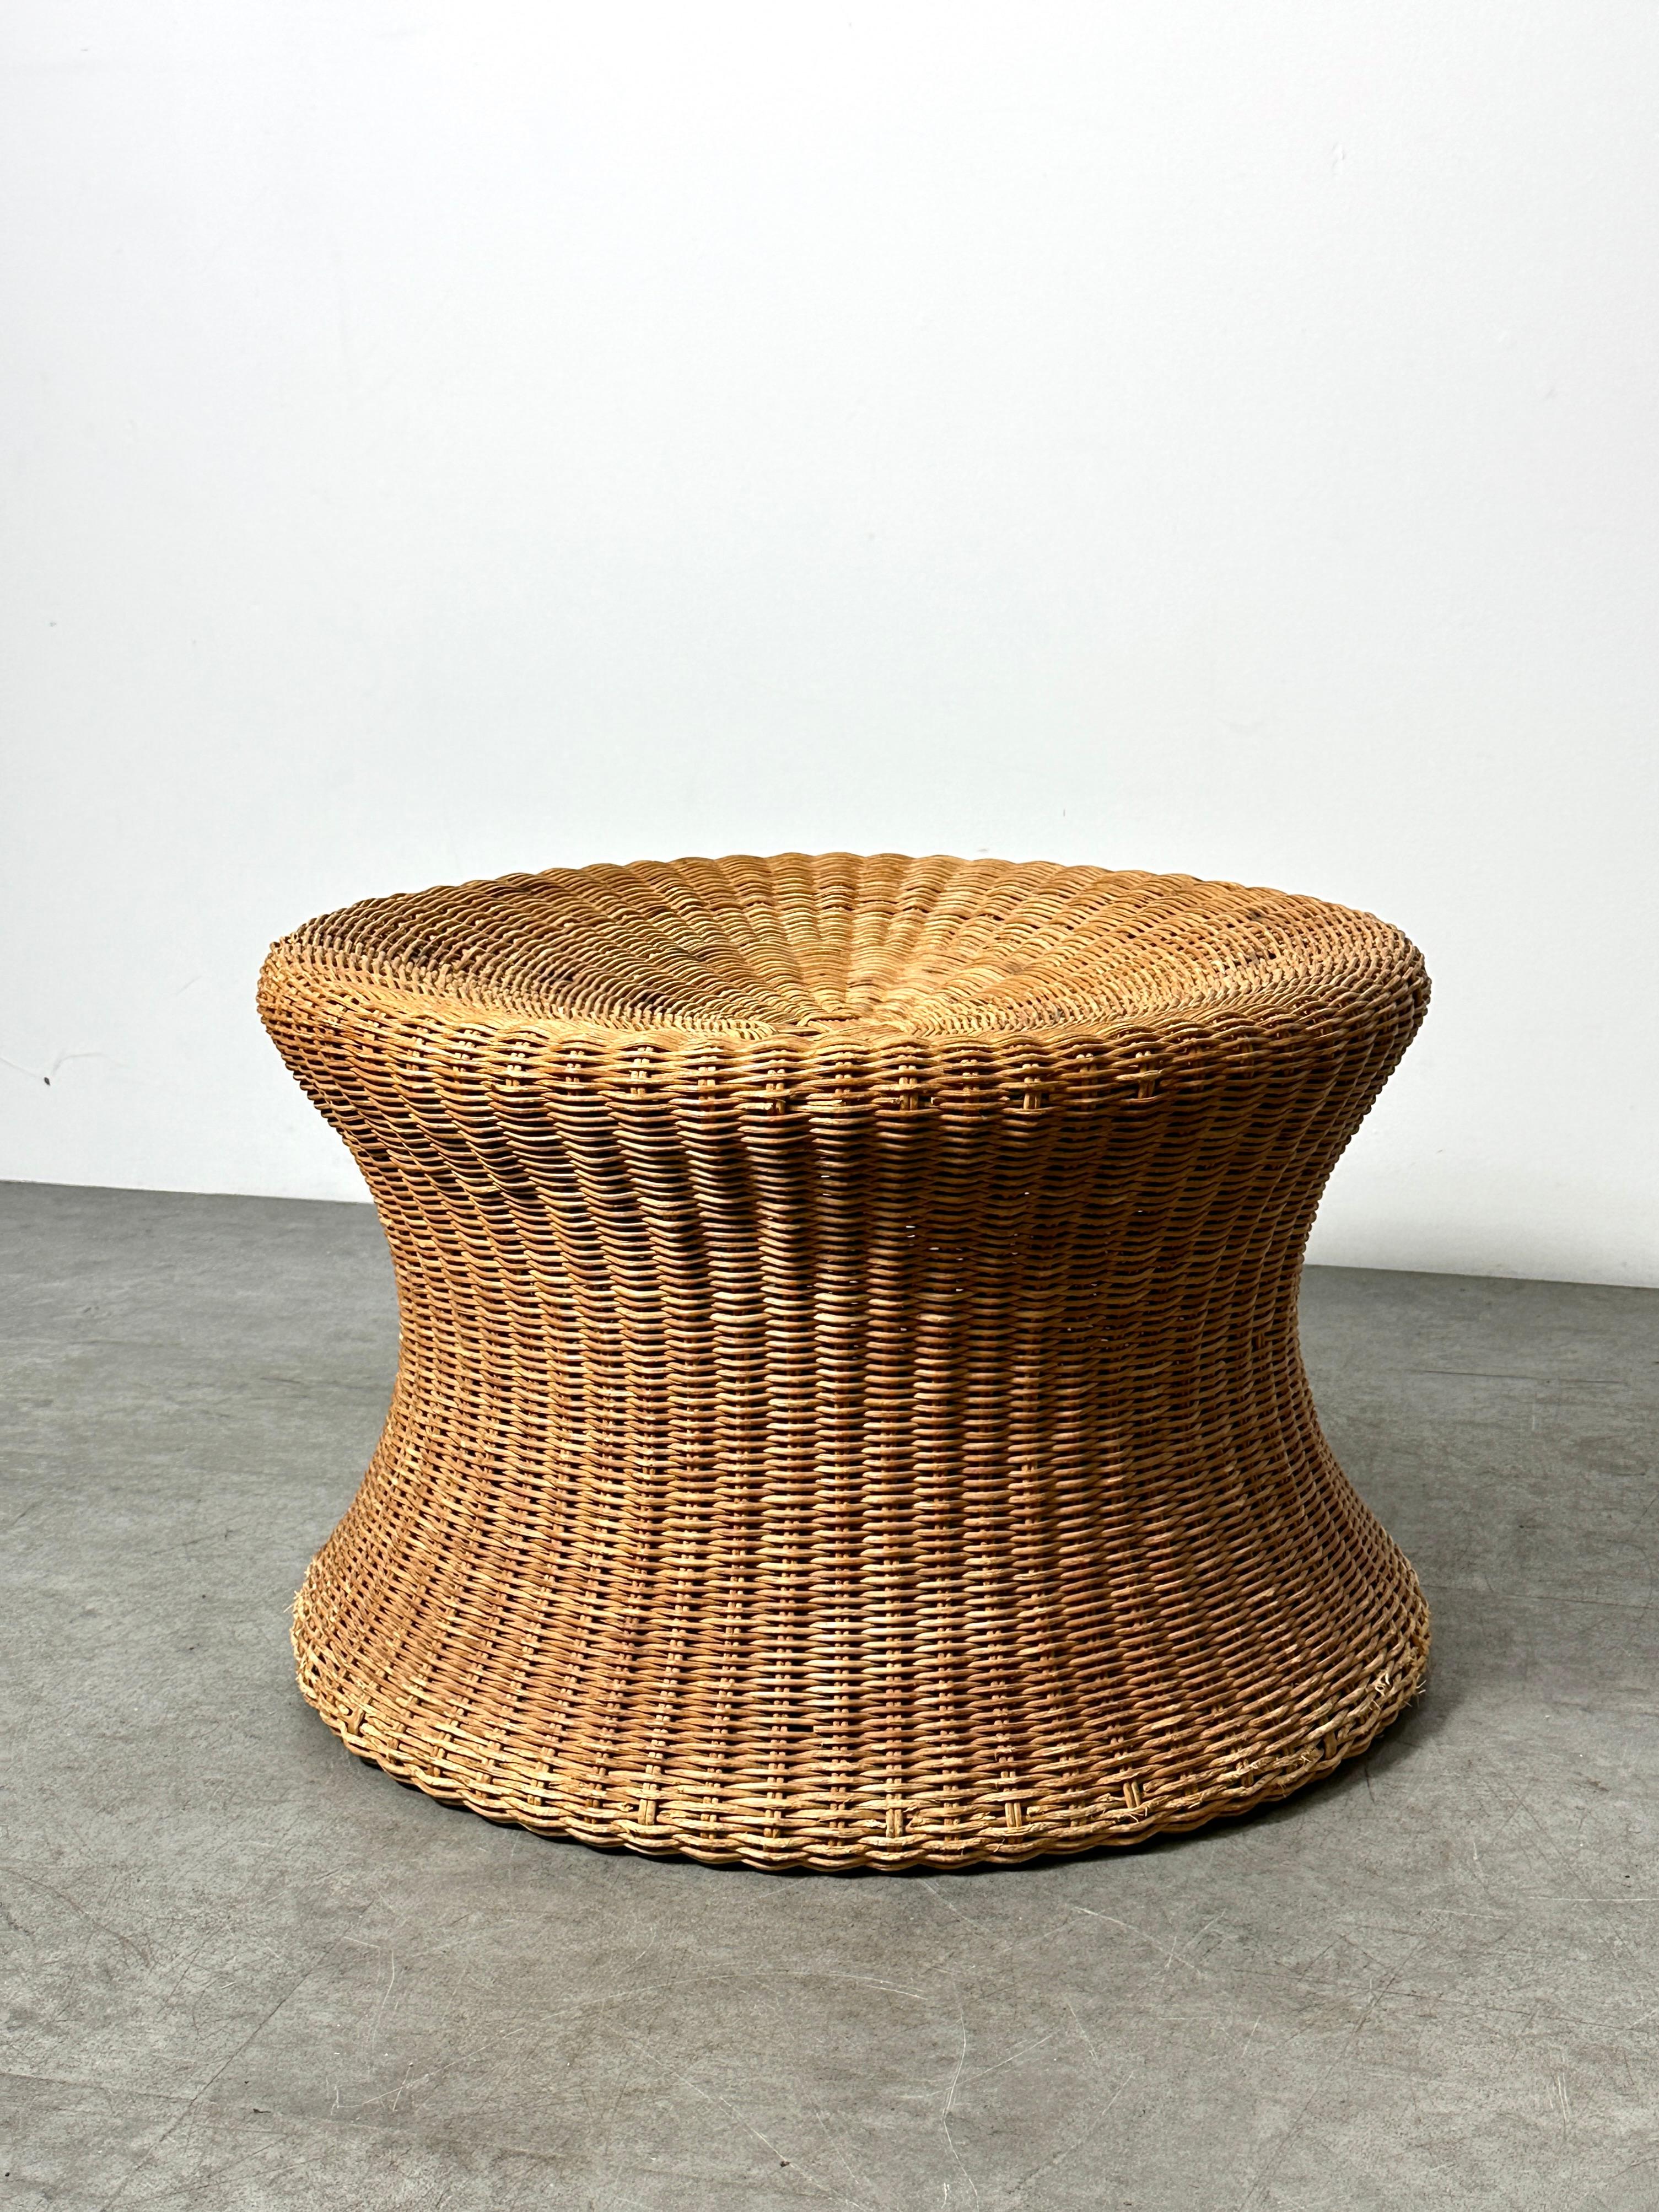 An original vintage Juttu stool designed by Eero Aarnio for Artek
Finland circa 1961

Mushroom form stool in woven rattan around an interior bamboo frame

22 inch diameter
14 inch height